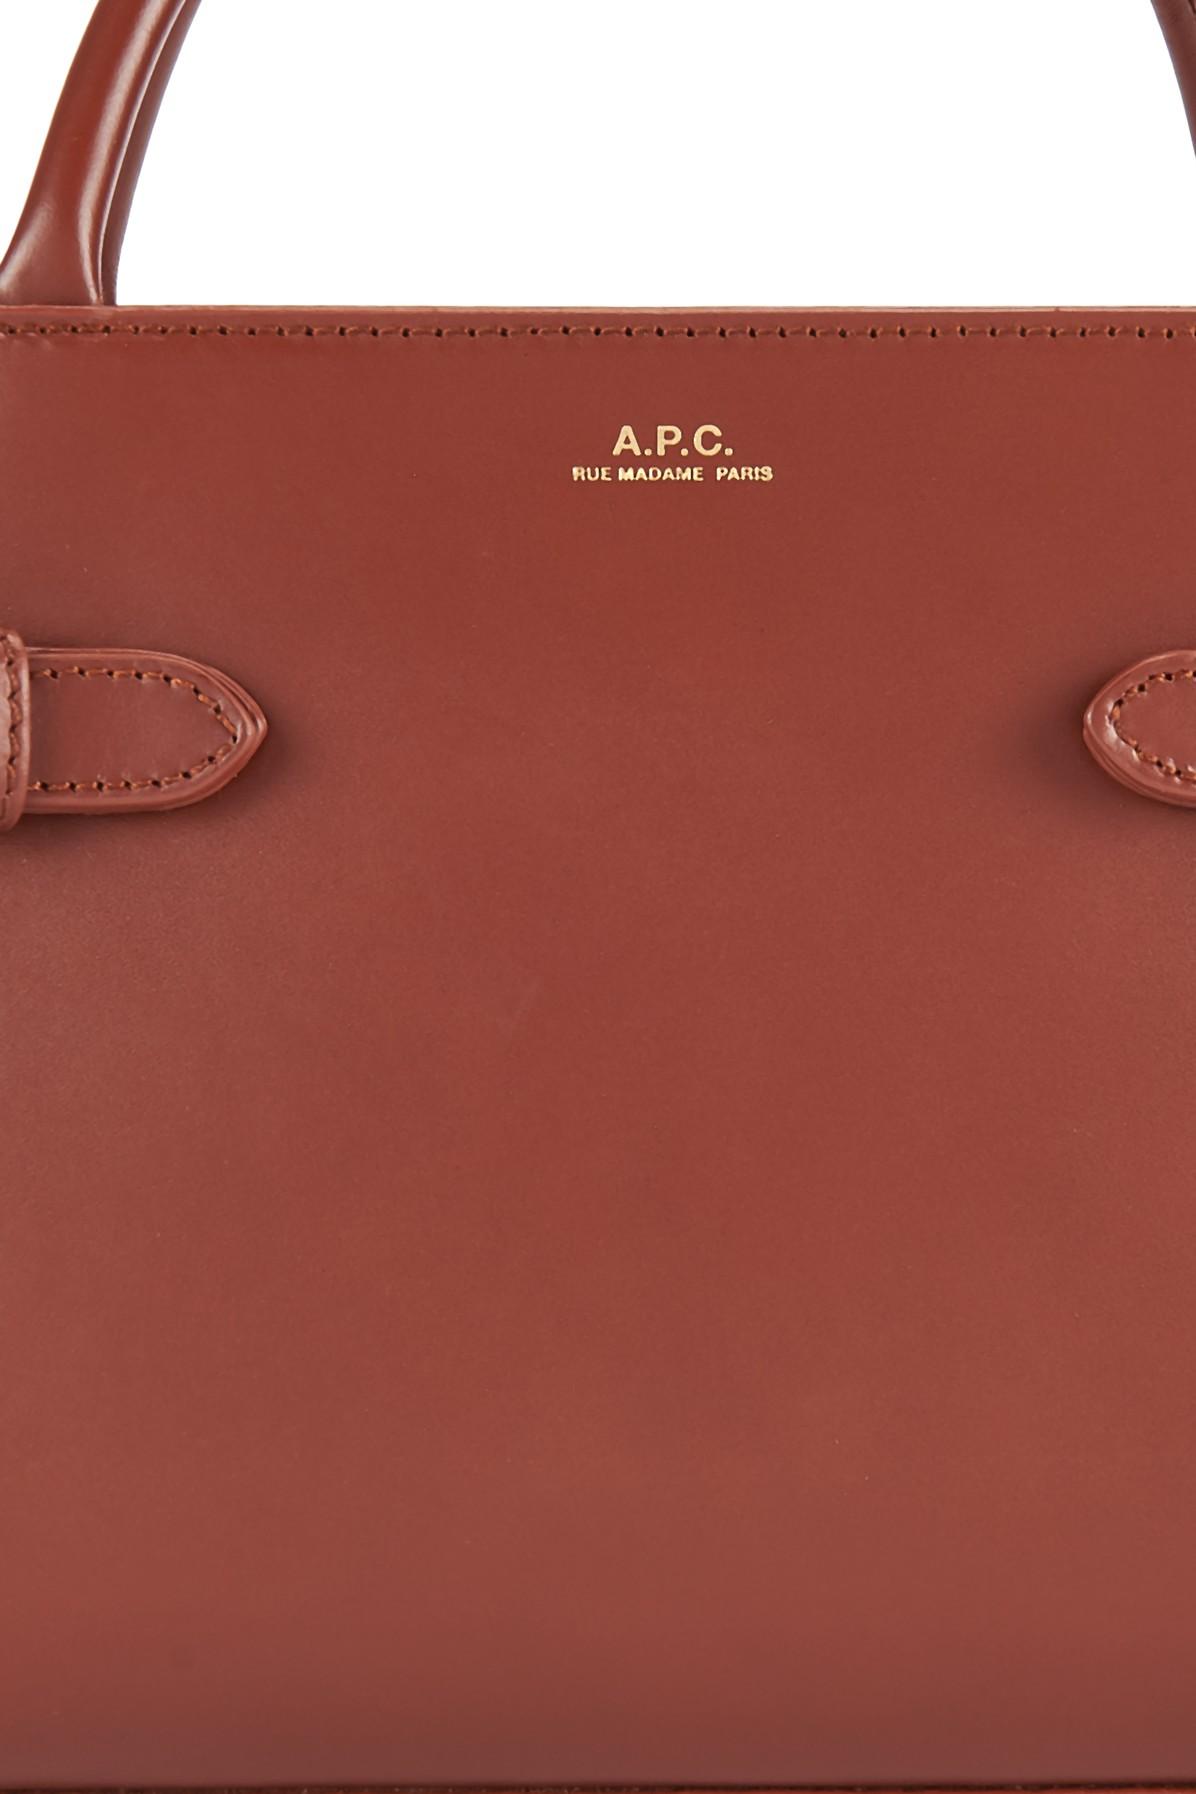 A.P.C. Mini Farrah Bag | Lyst